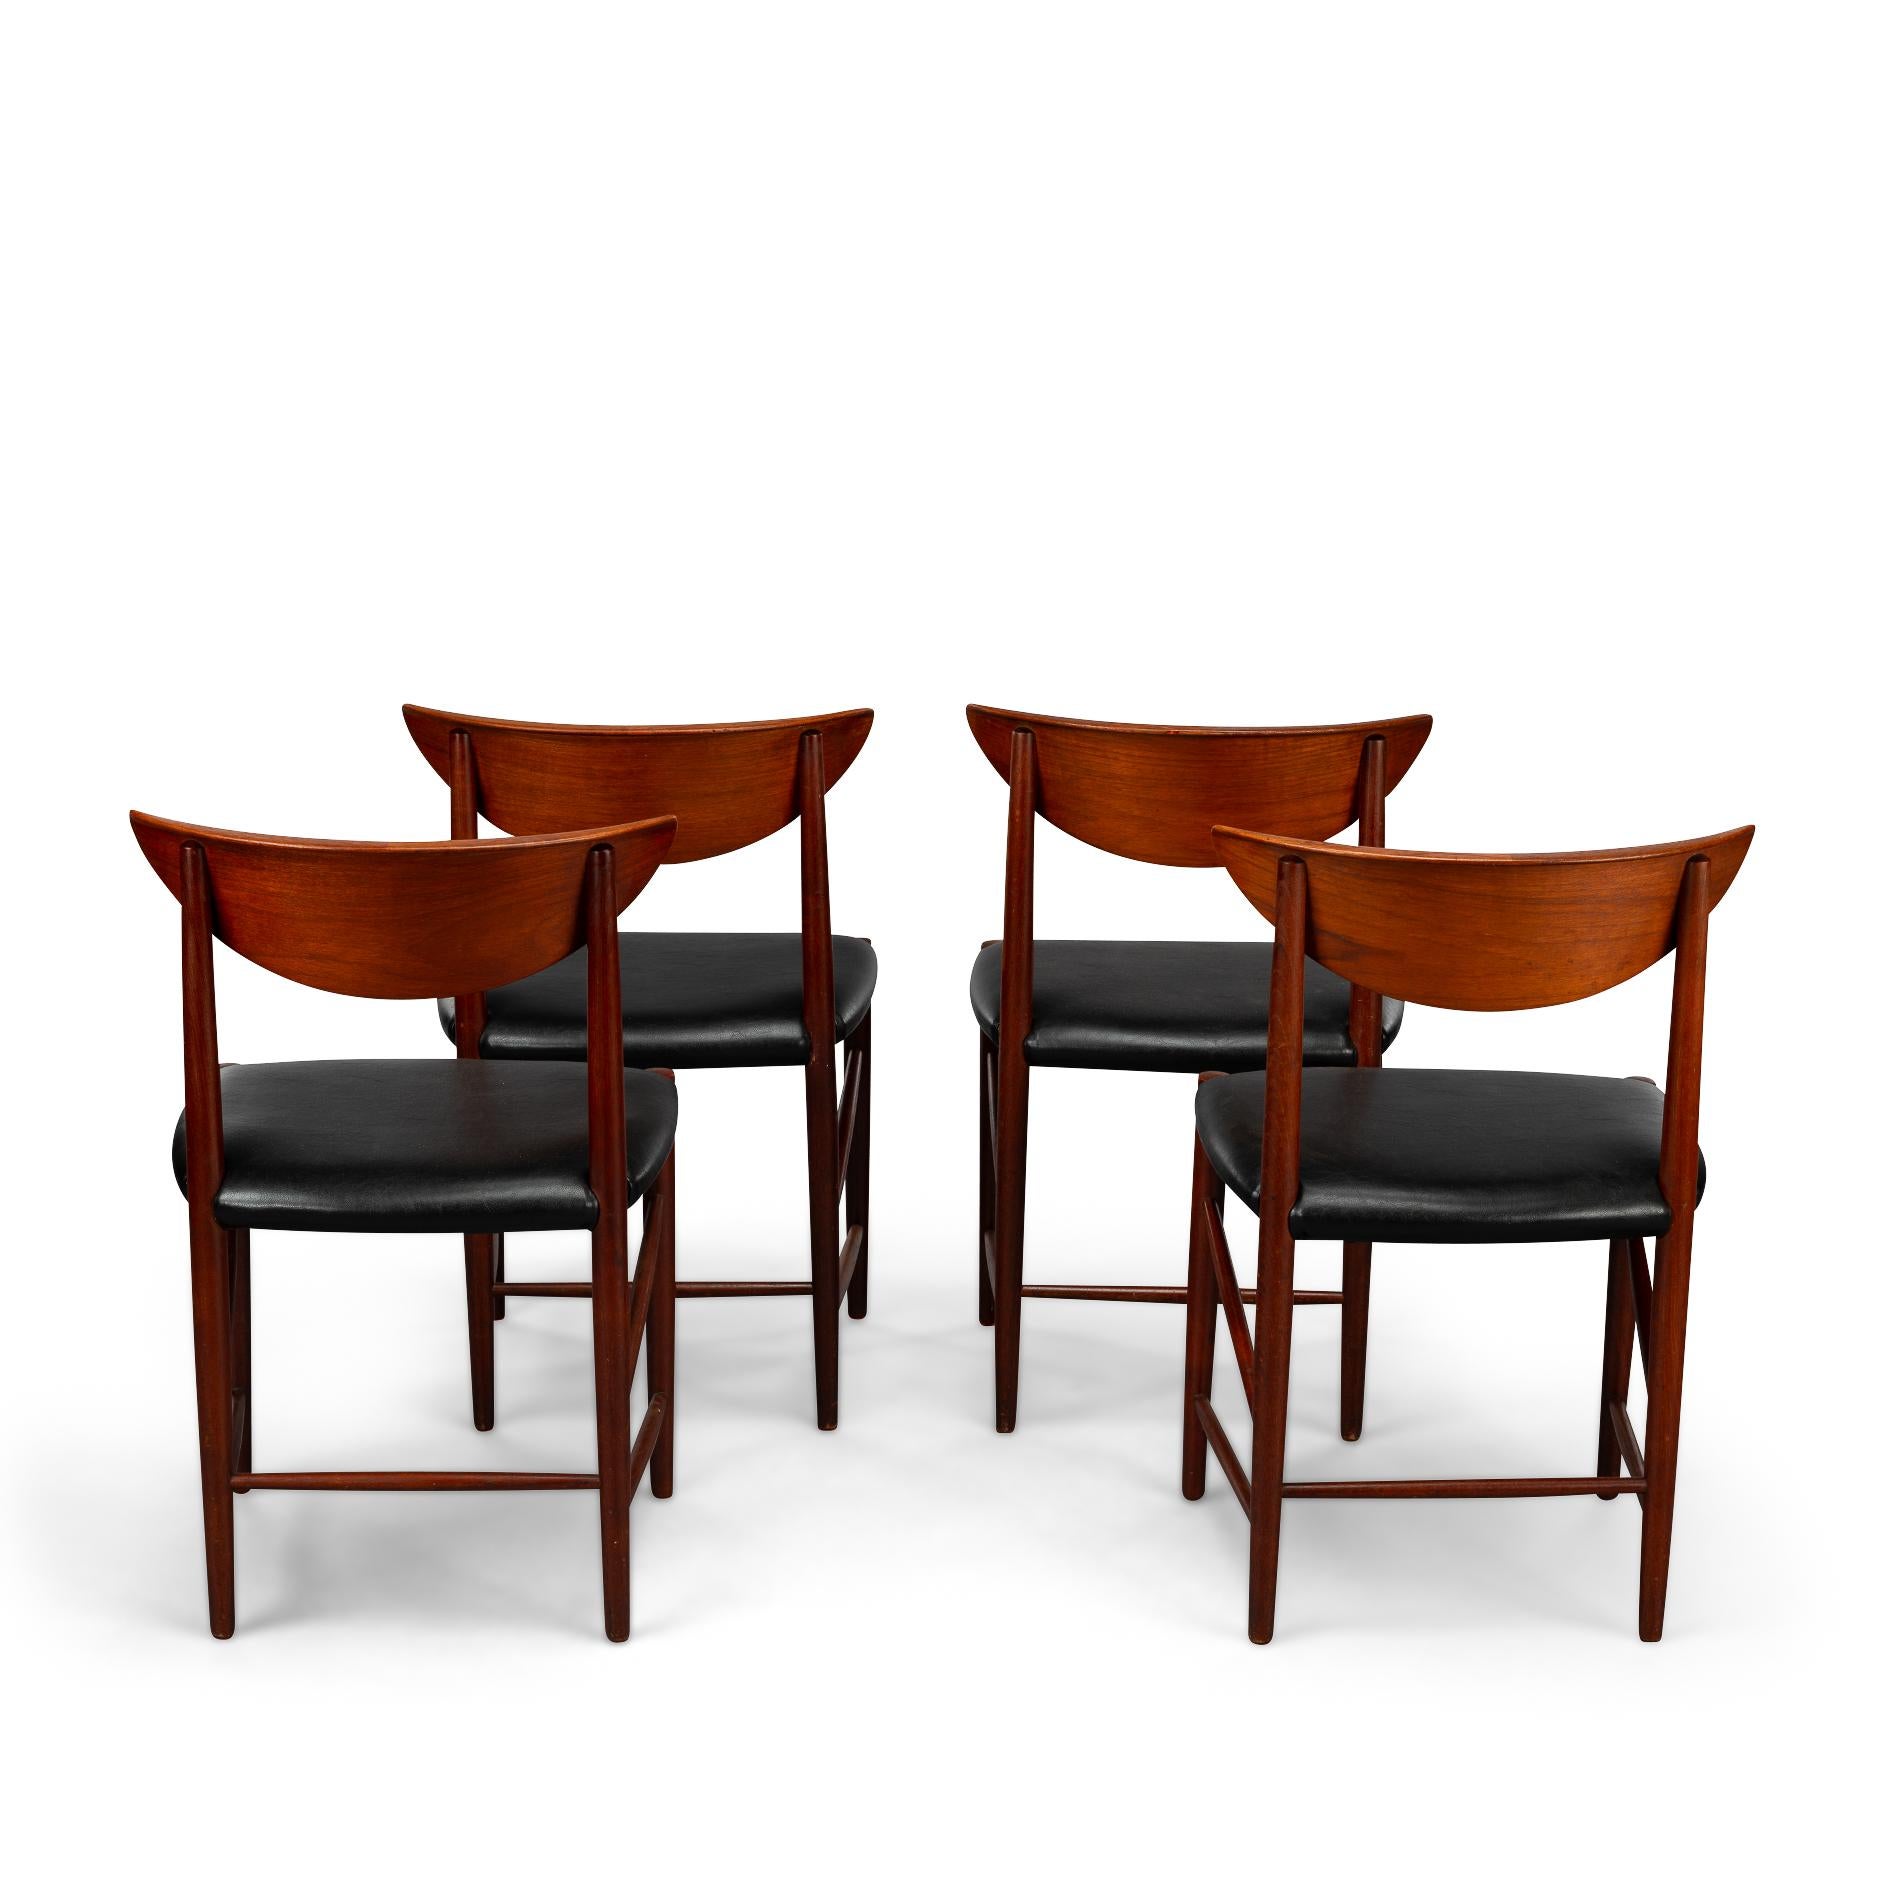 Mid-Century Modern Reupholstered Teak Chair Model # 317 by Peter Hvidt for Soborg Mobel, Set of 4 For Sale